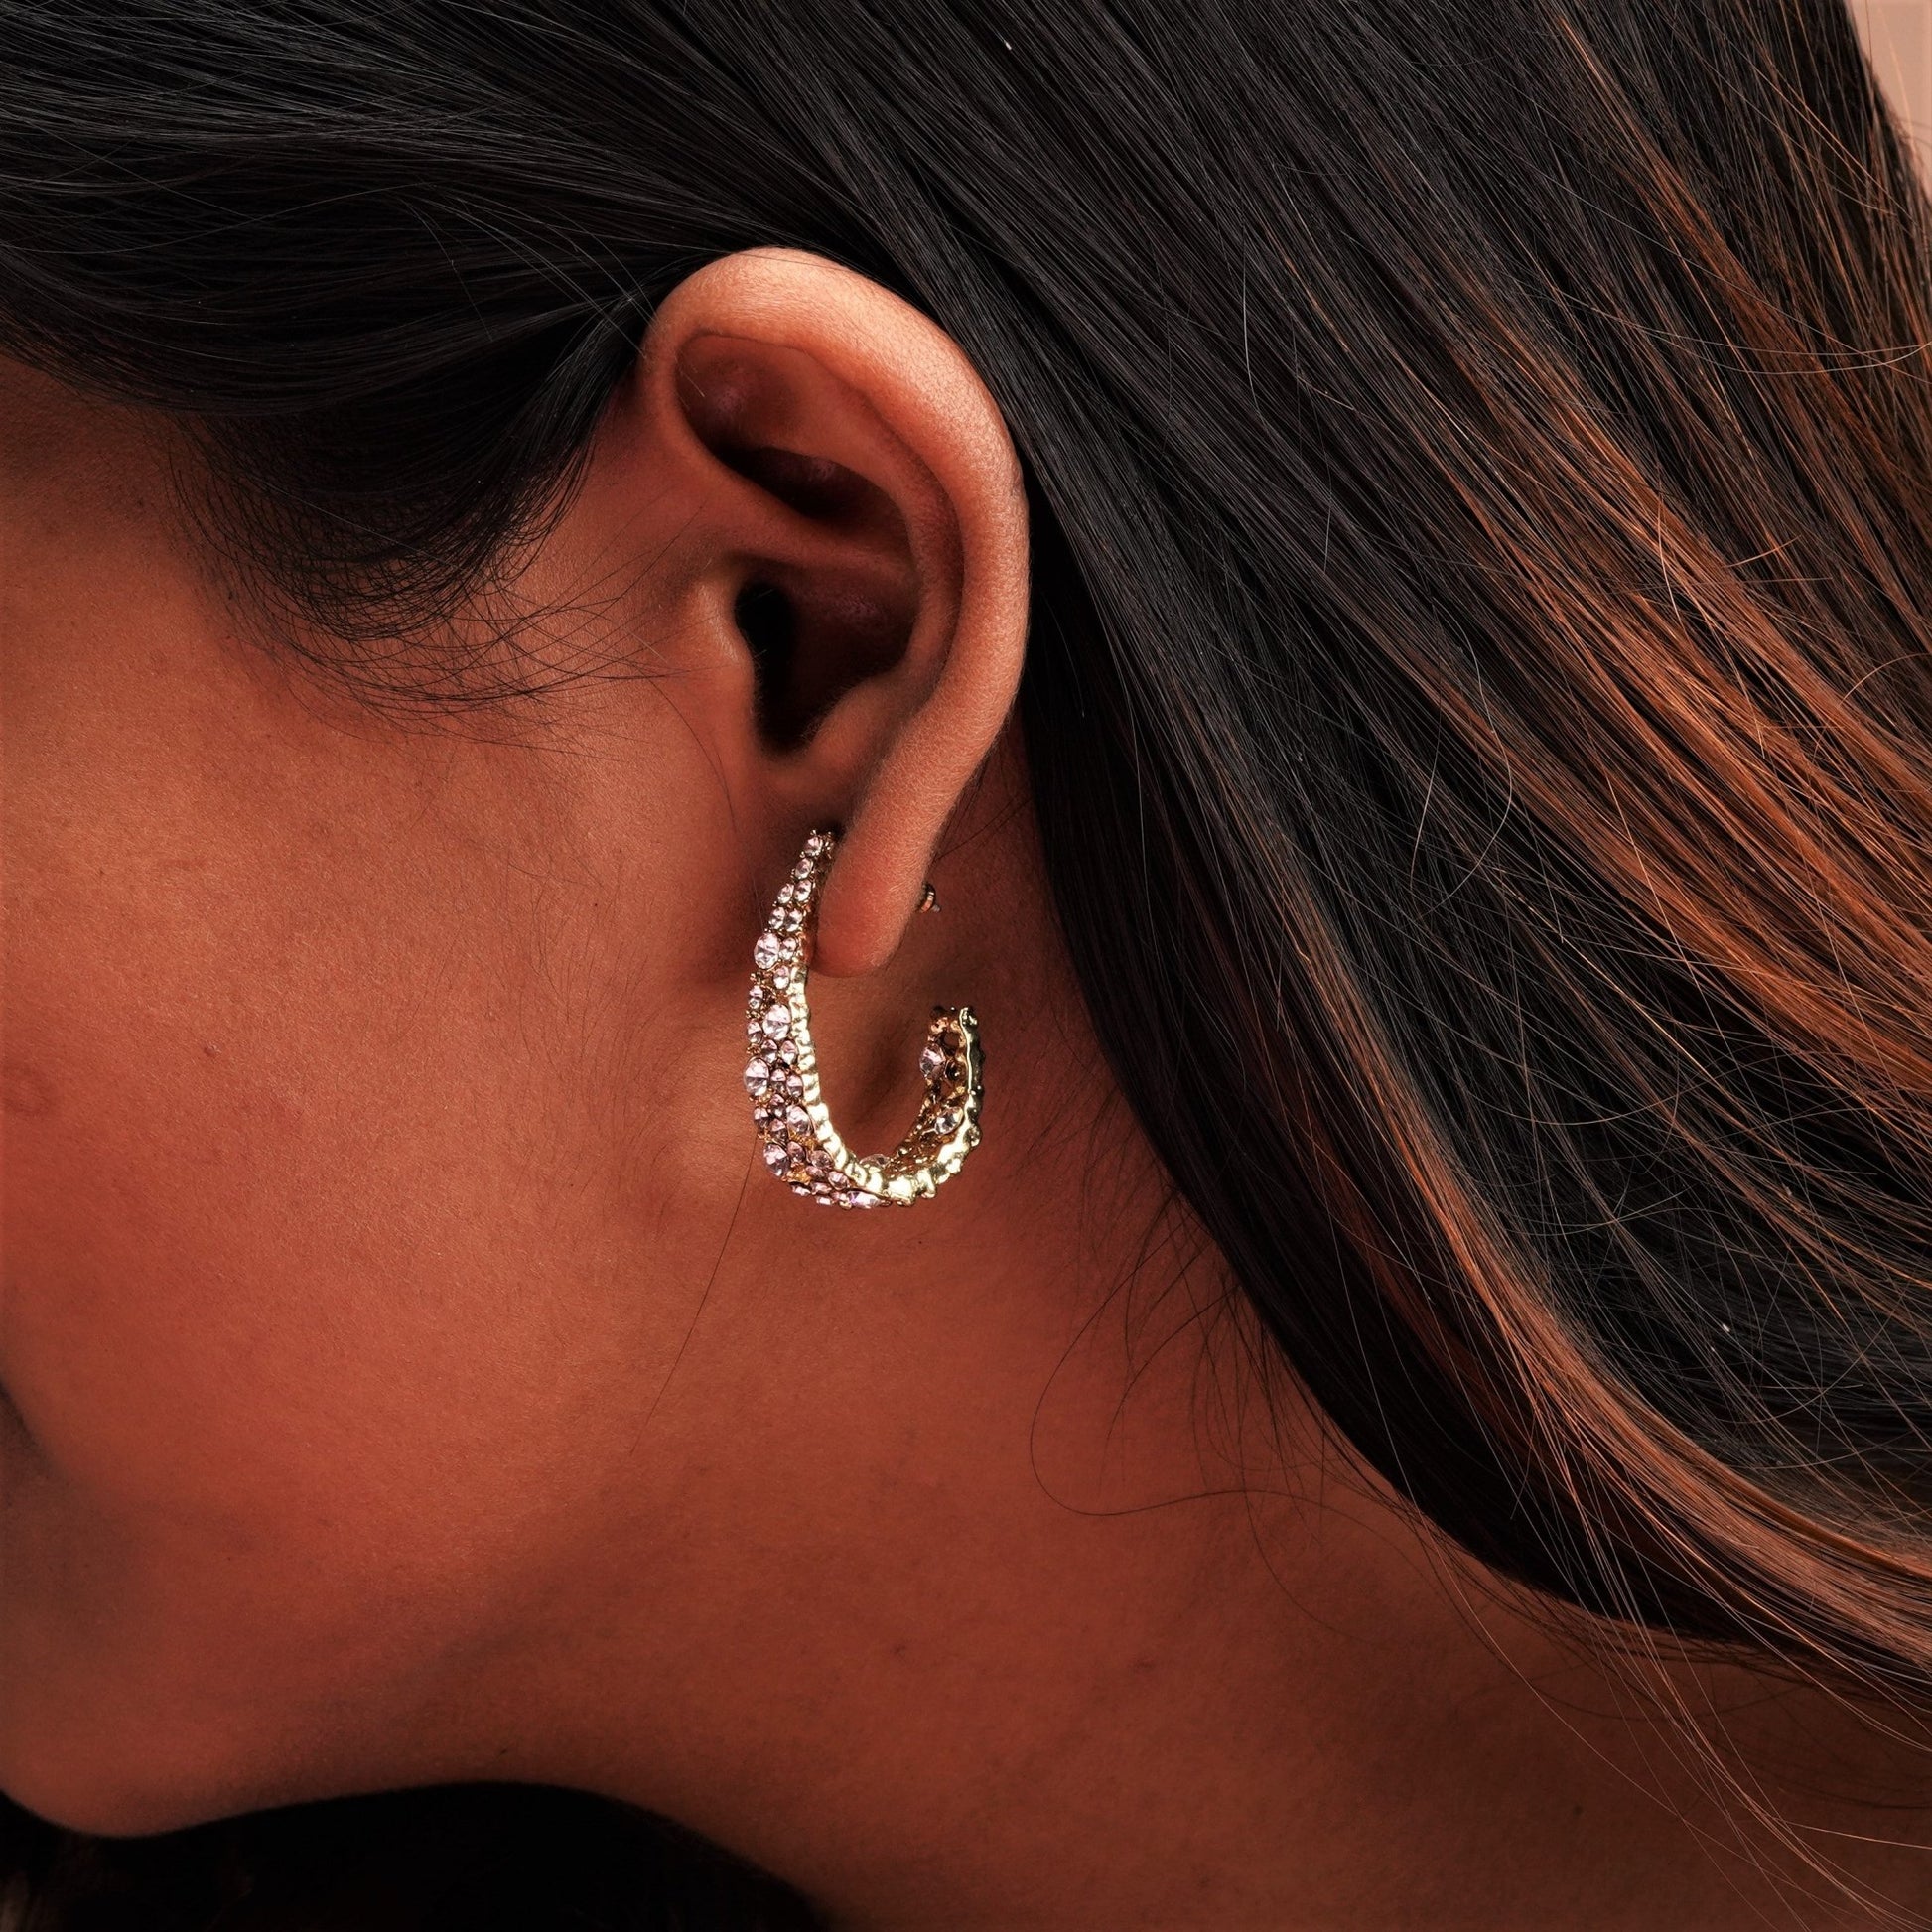 A stylish design earring on a girl's ear